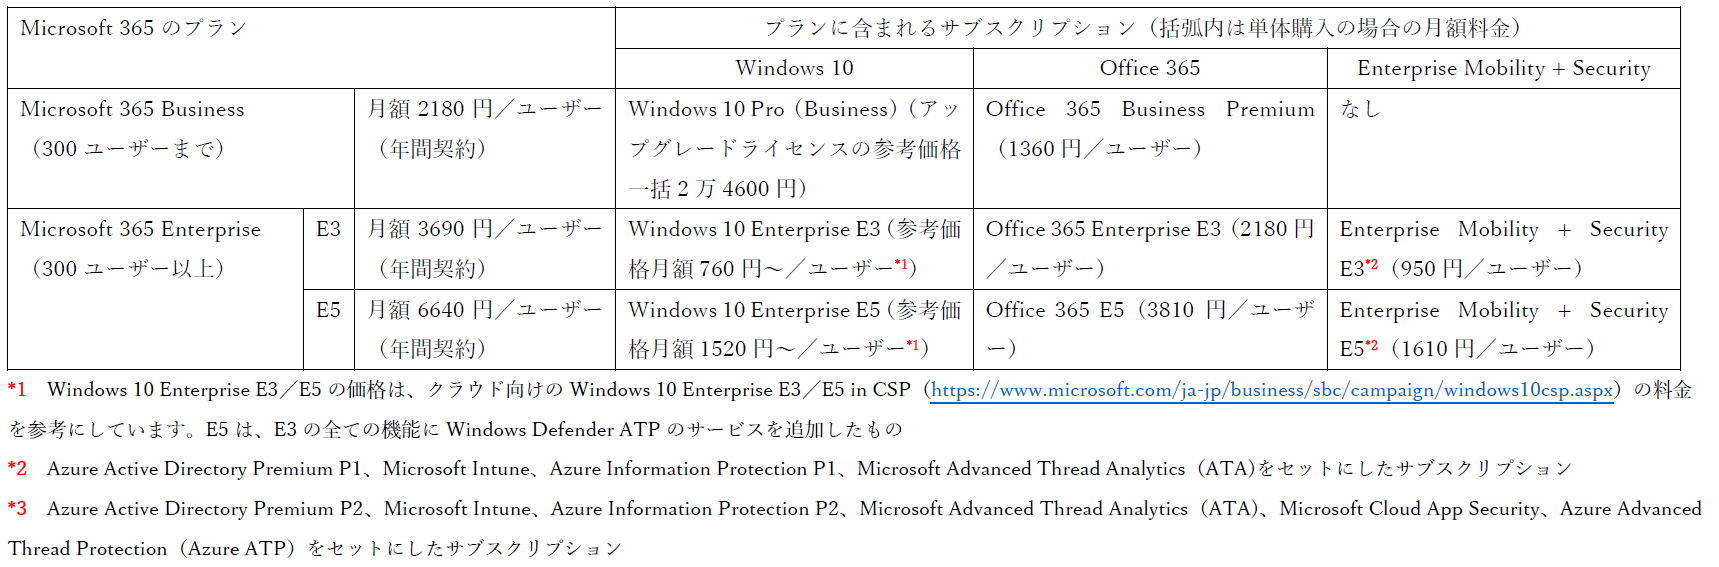 Windows 10への移行を支援する中小企業向け「Microsoft 365 Business